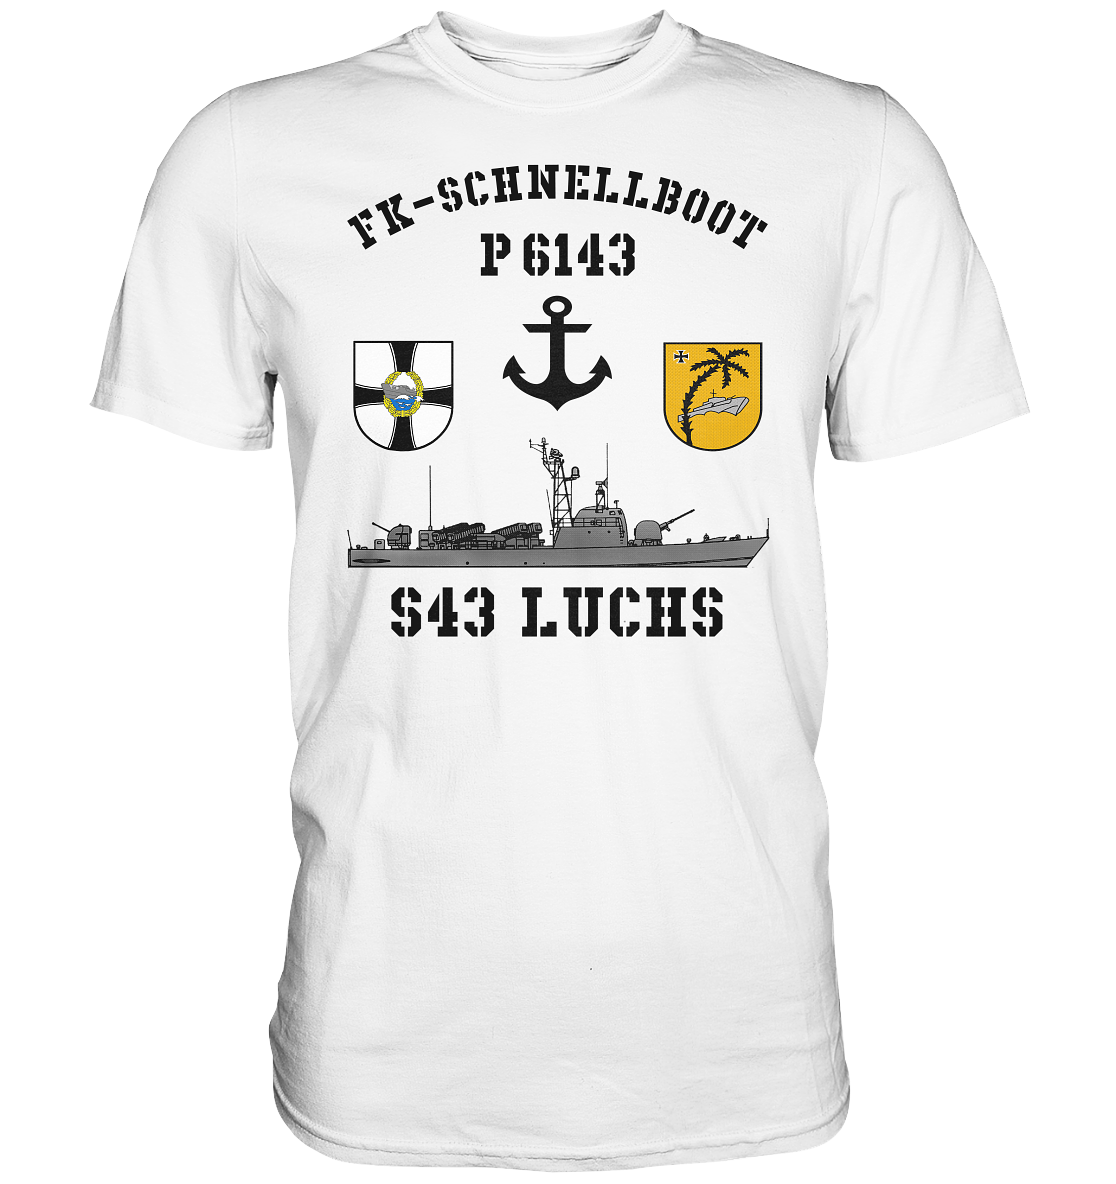 P6143 S43 LUCHS - Premium Shirt